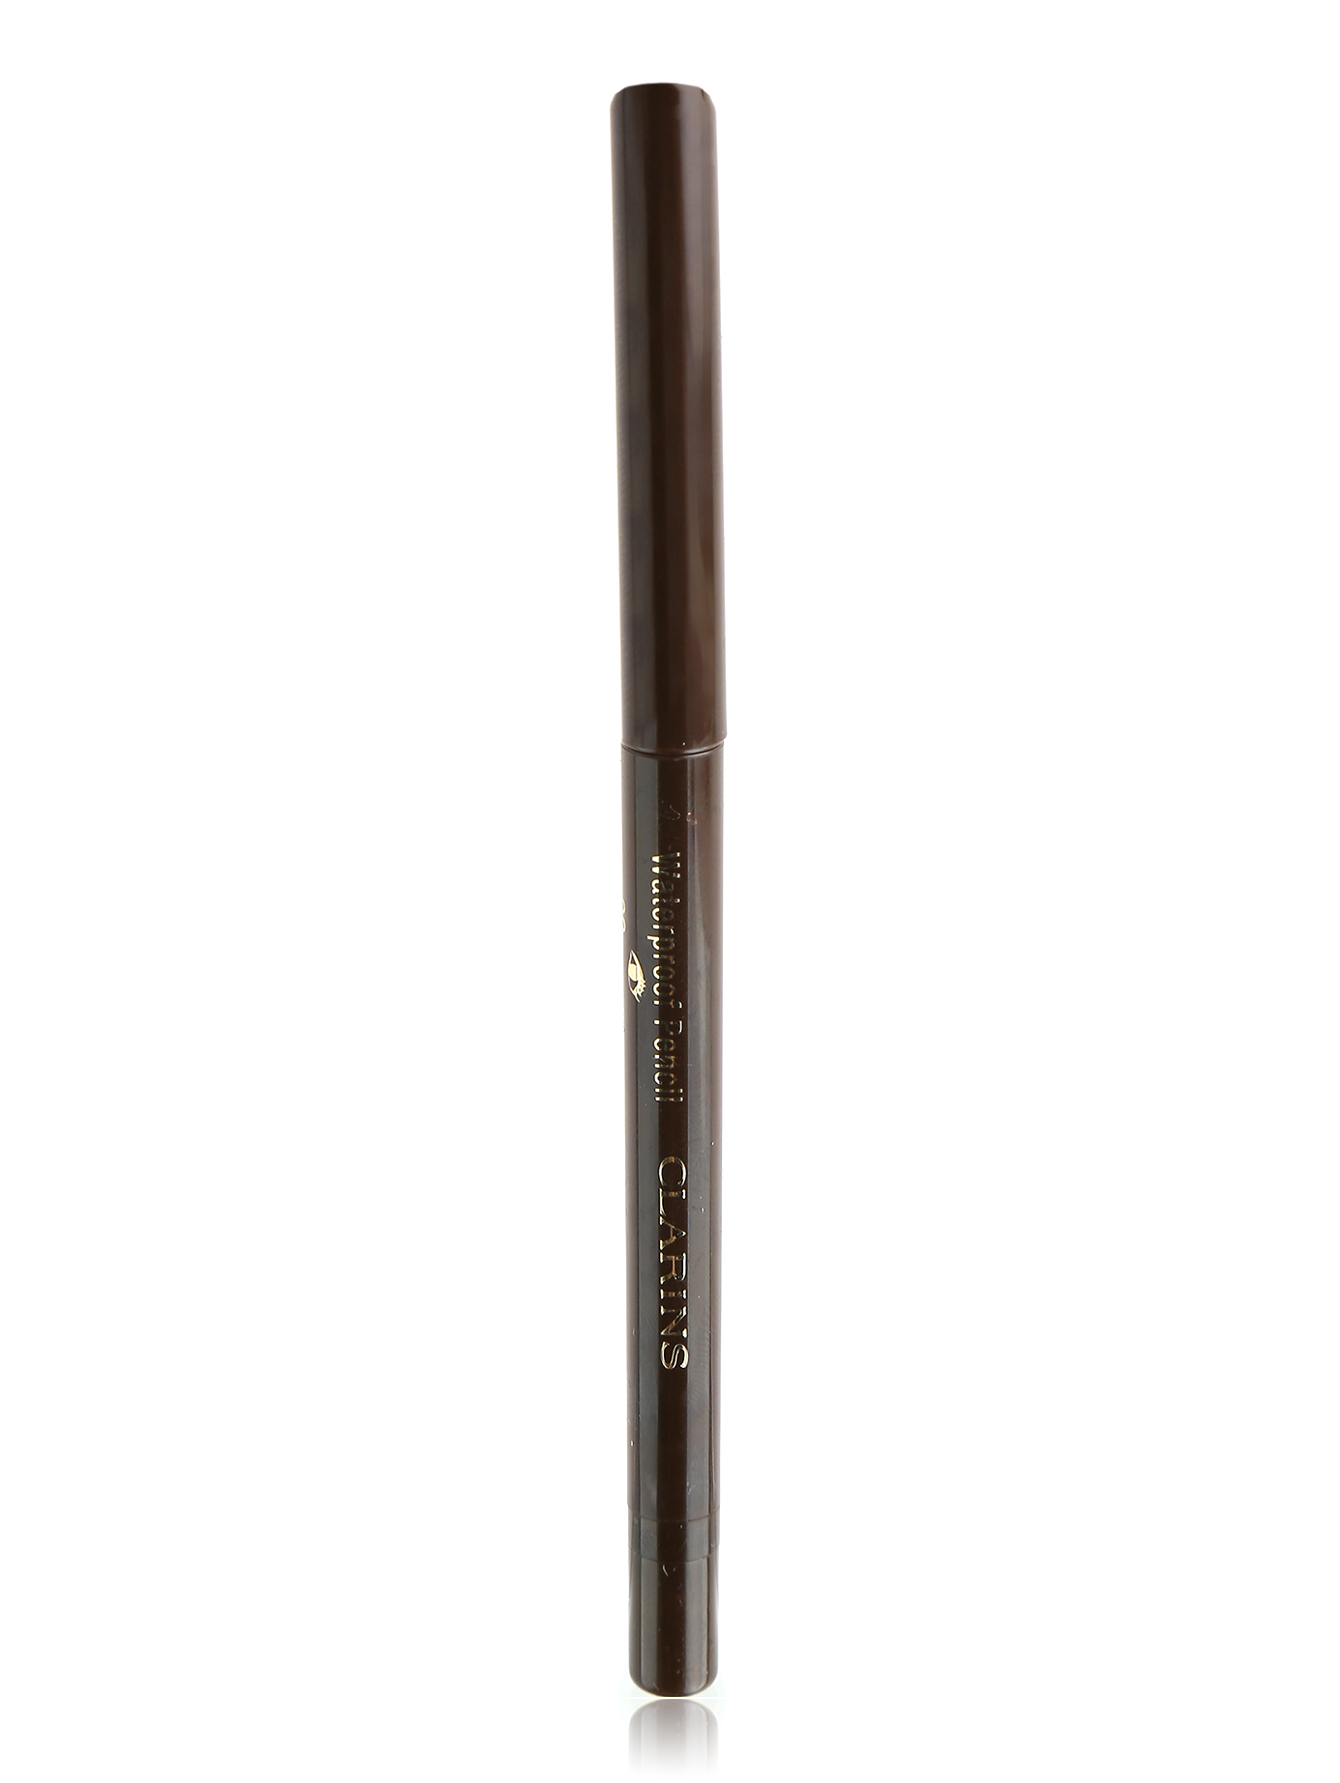 Карандаш для глаз Waterproof Pencil 02 Makeup - Общий вид